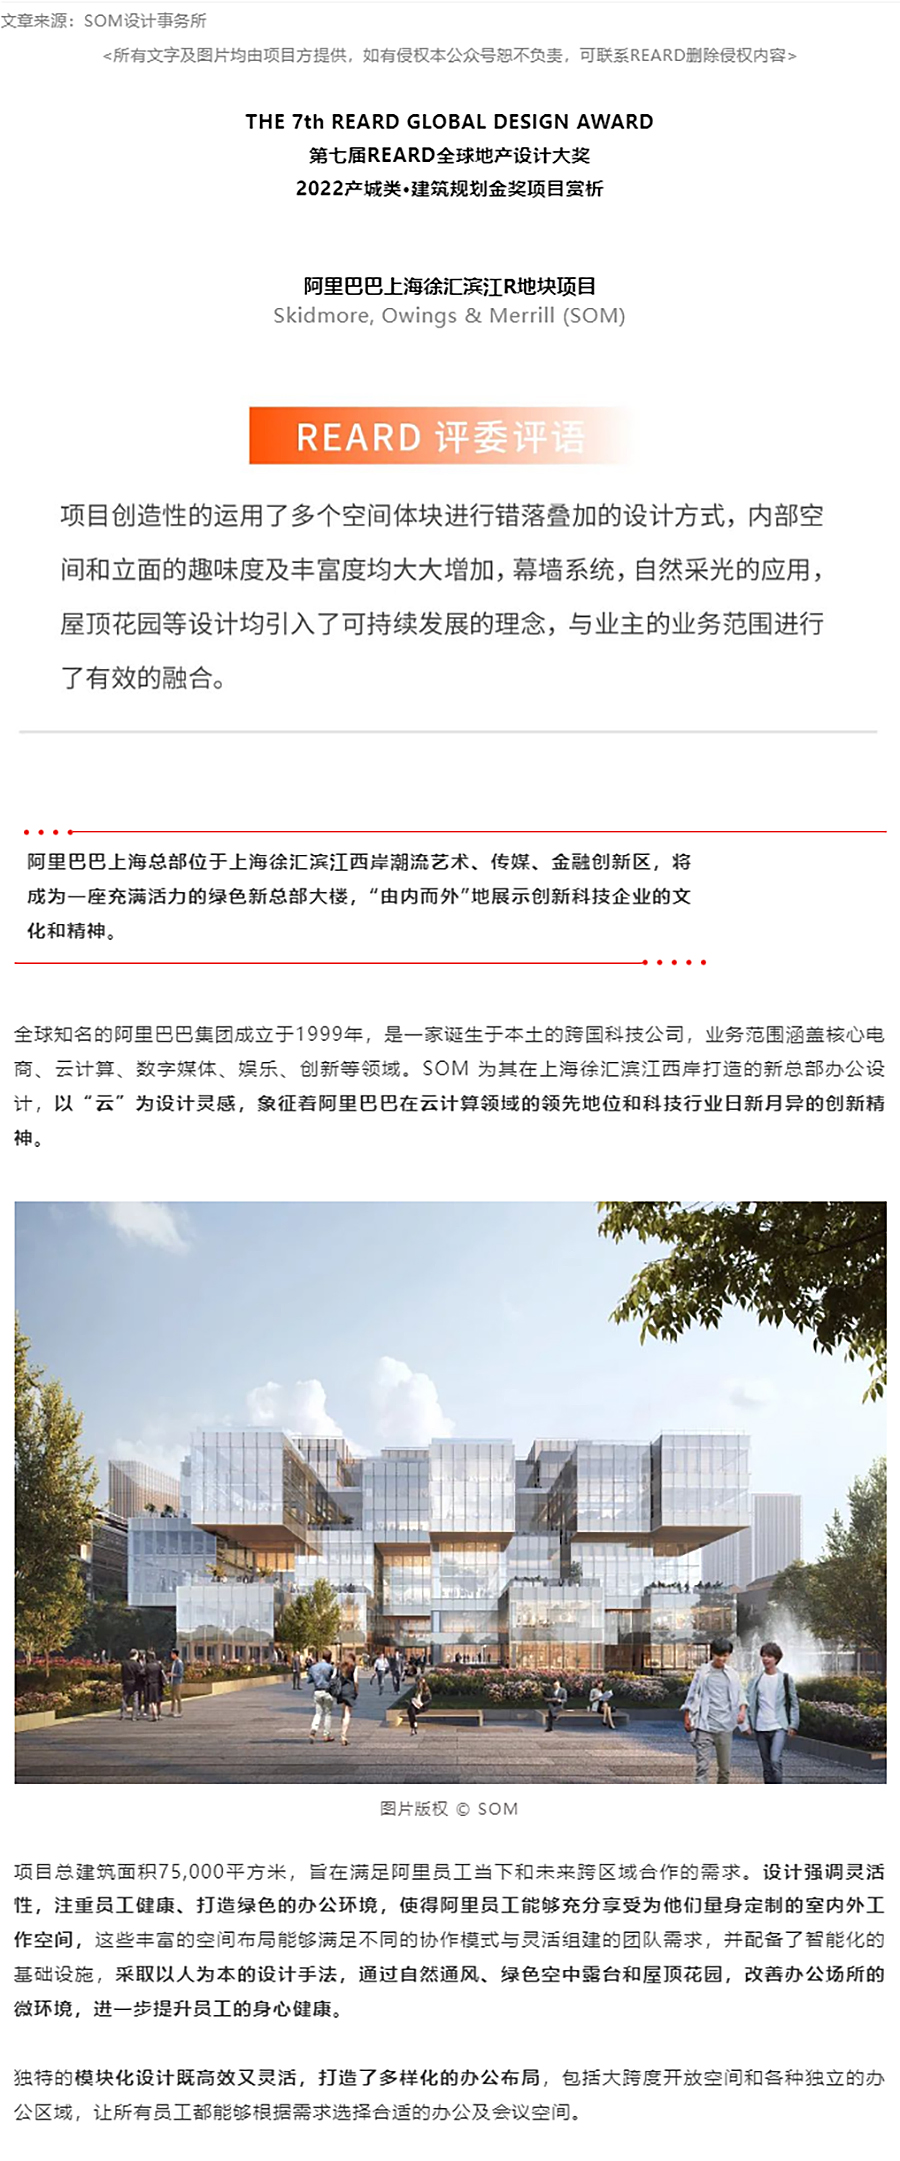 【2022REARD金奖作品赏析】SOM-为阿里巴巴打造全天候互动、可“灵活控制”的上海总部_0000_图层-1 拷贝.jpg